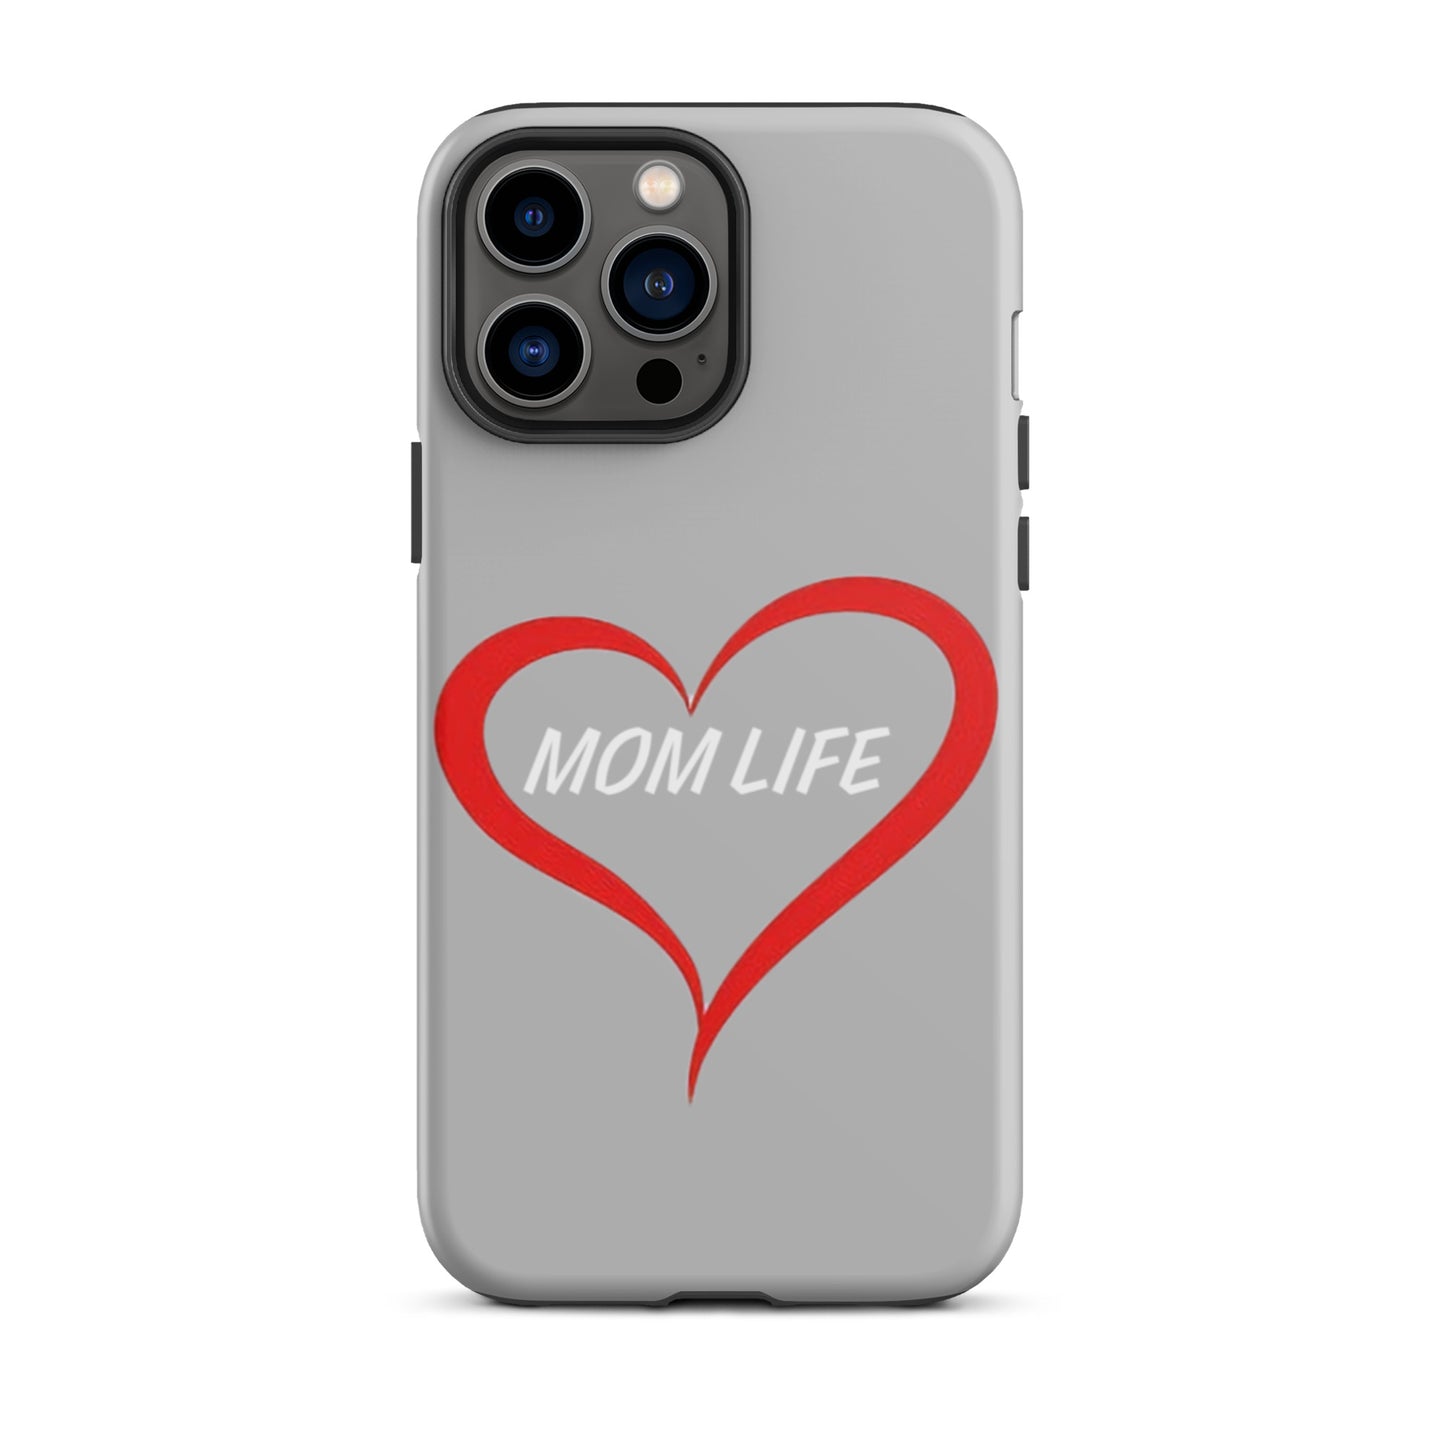 Mom Life iPhone case